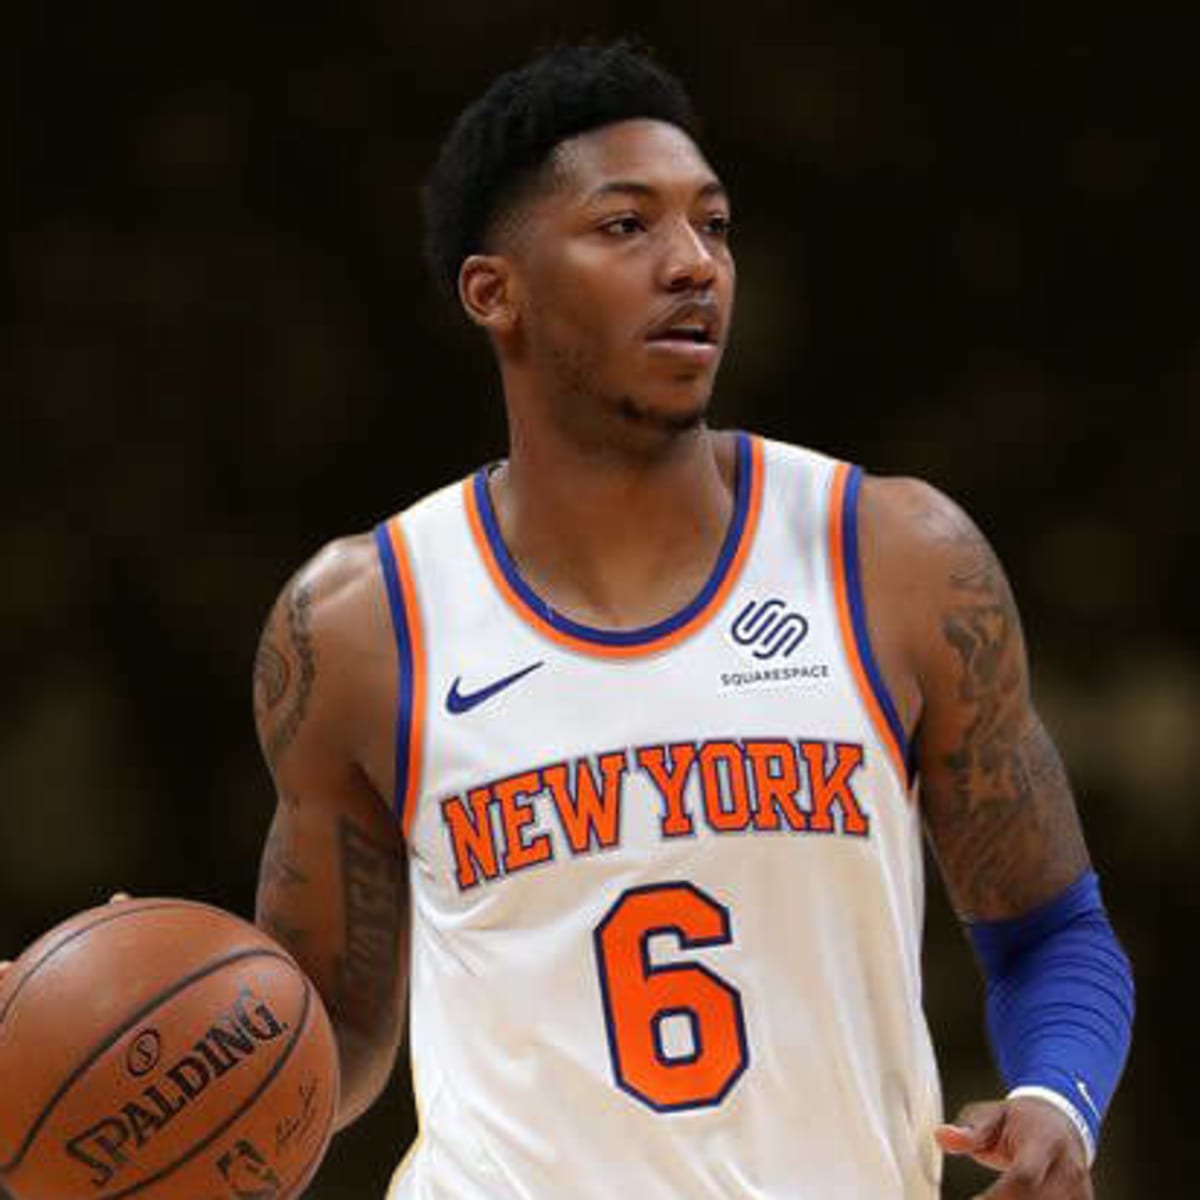 Sixth man at Garden gives hard-playing Knicks an edge - Newsday